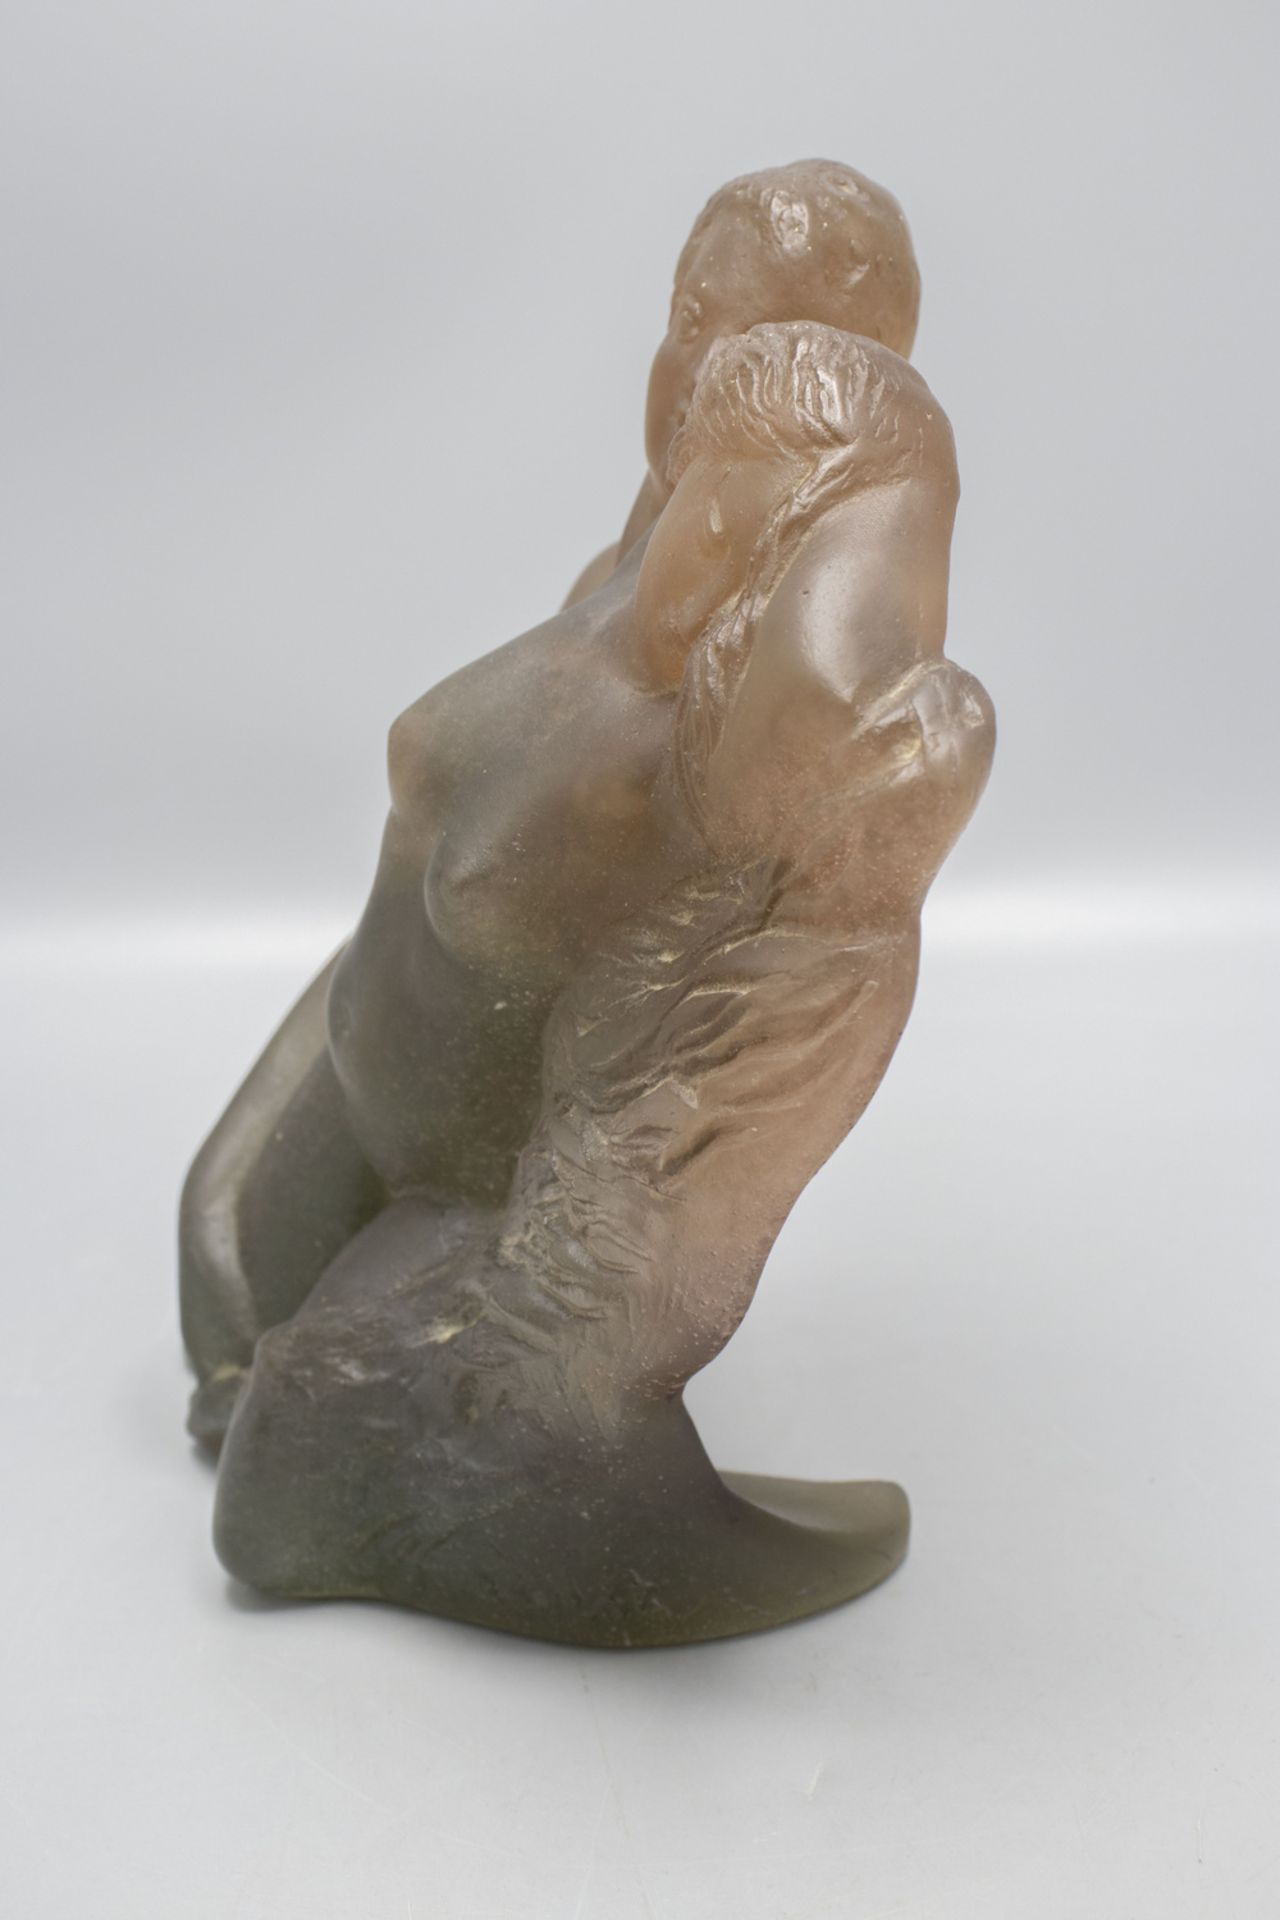 Patè de Verre Glasskulptur 'Liebespaar', Daum France, Frankreich, 1960er Jahre - Image 3 of 8